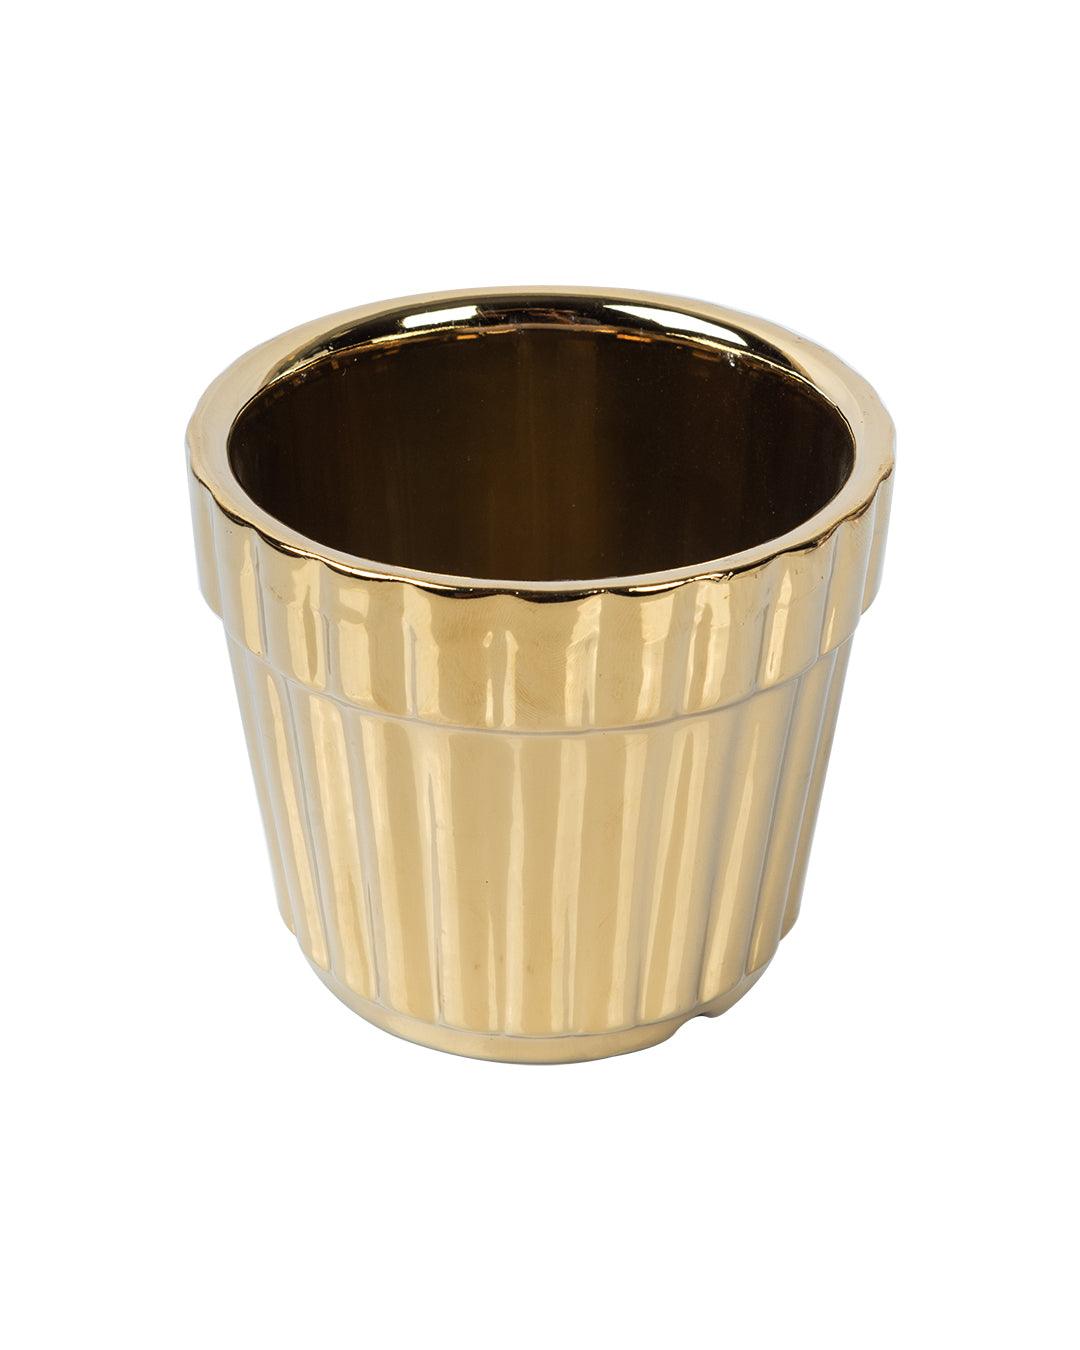 Metallic Style Table Planter, Golden, Ceramic - MARKET 99